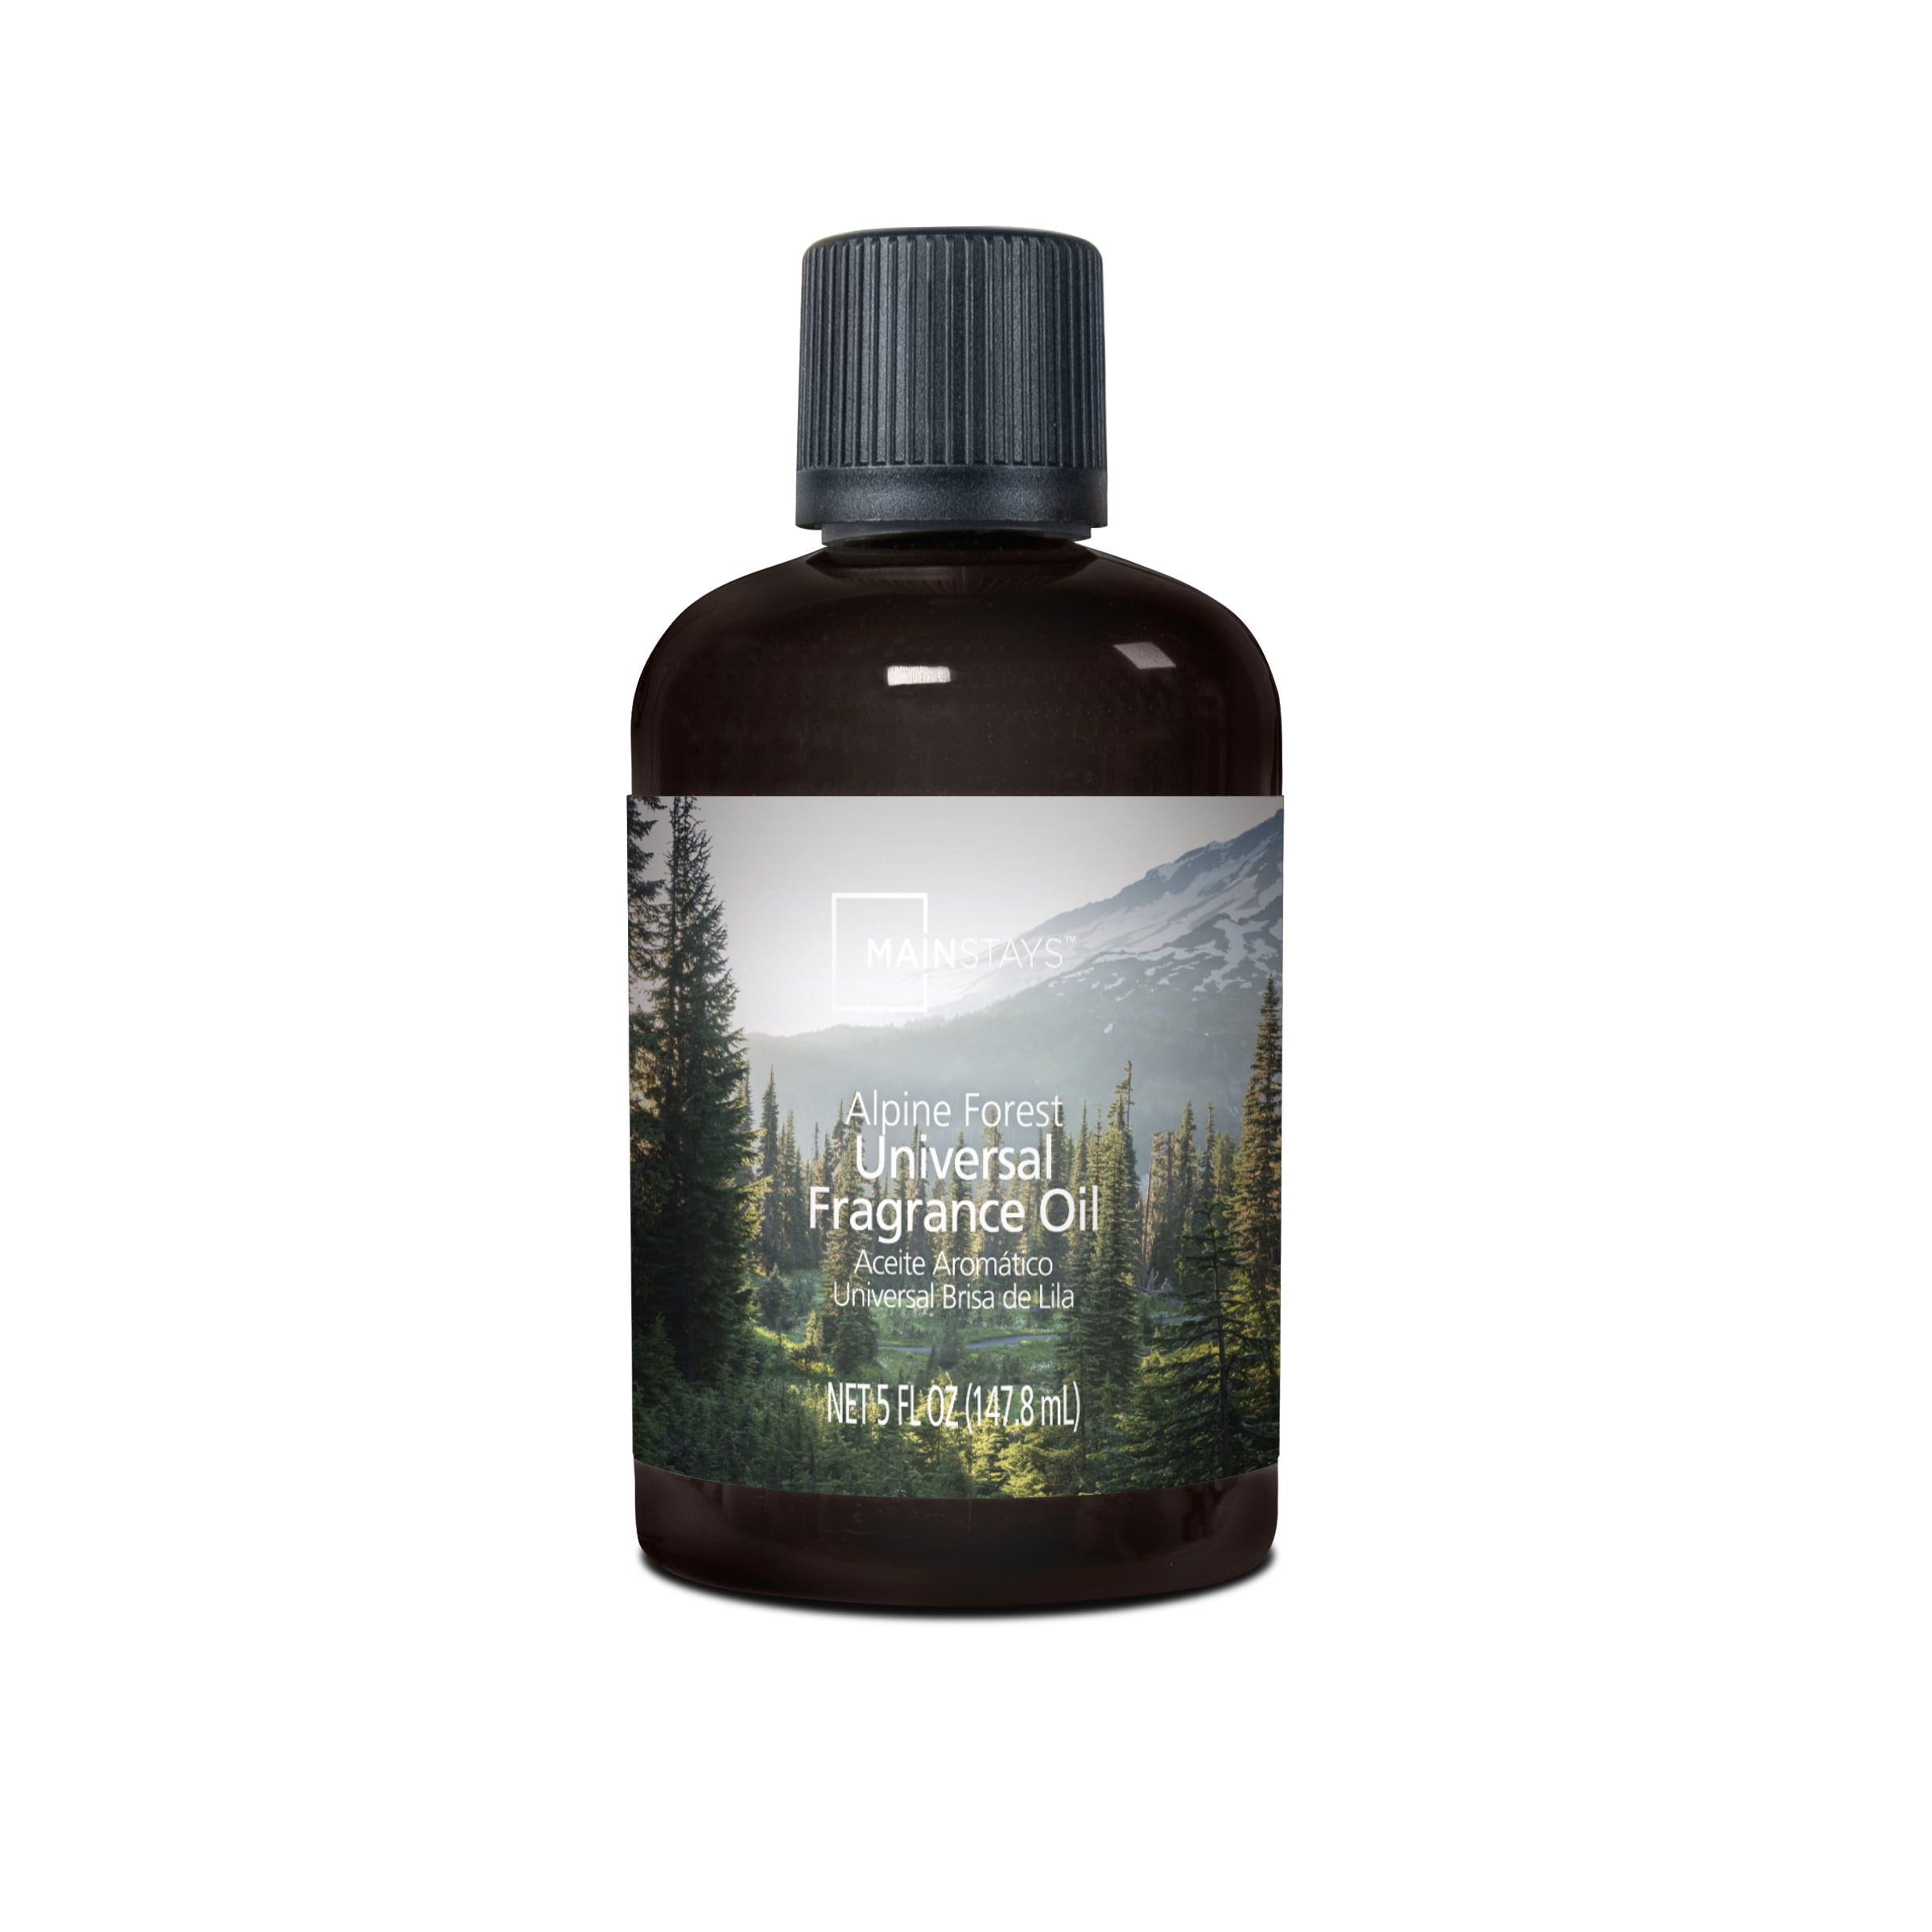 Mainstays Universal Fragrance Oil, Alpine Forest, 5 fl oz